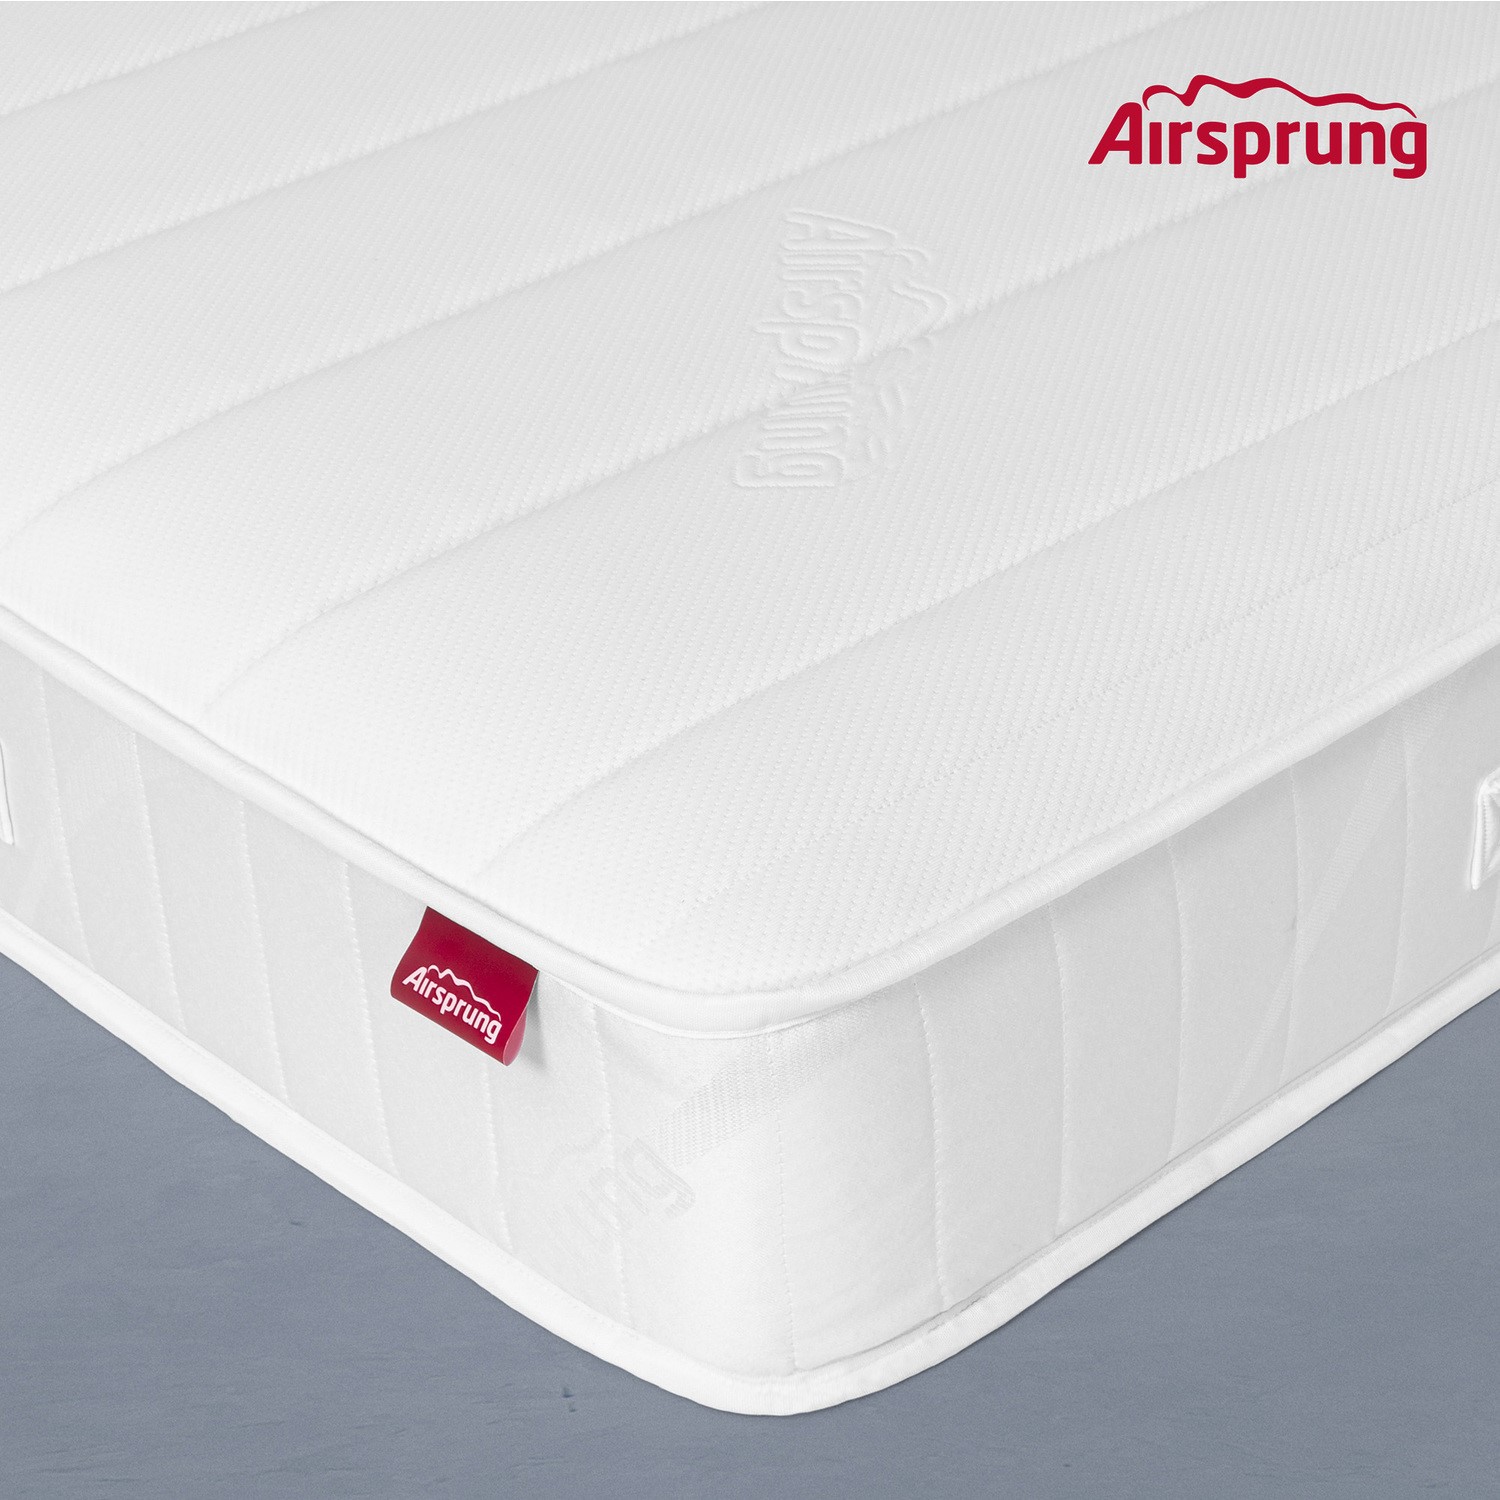 Airsprung hybrid rolled pocket sprung mattress - double